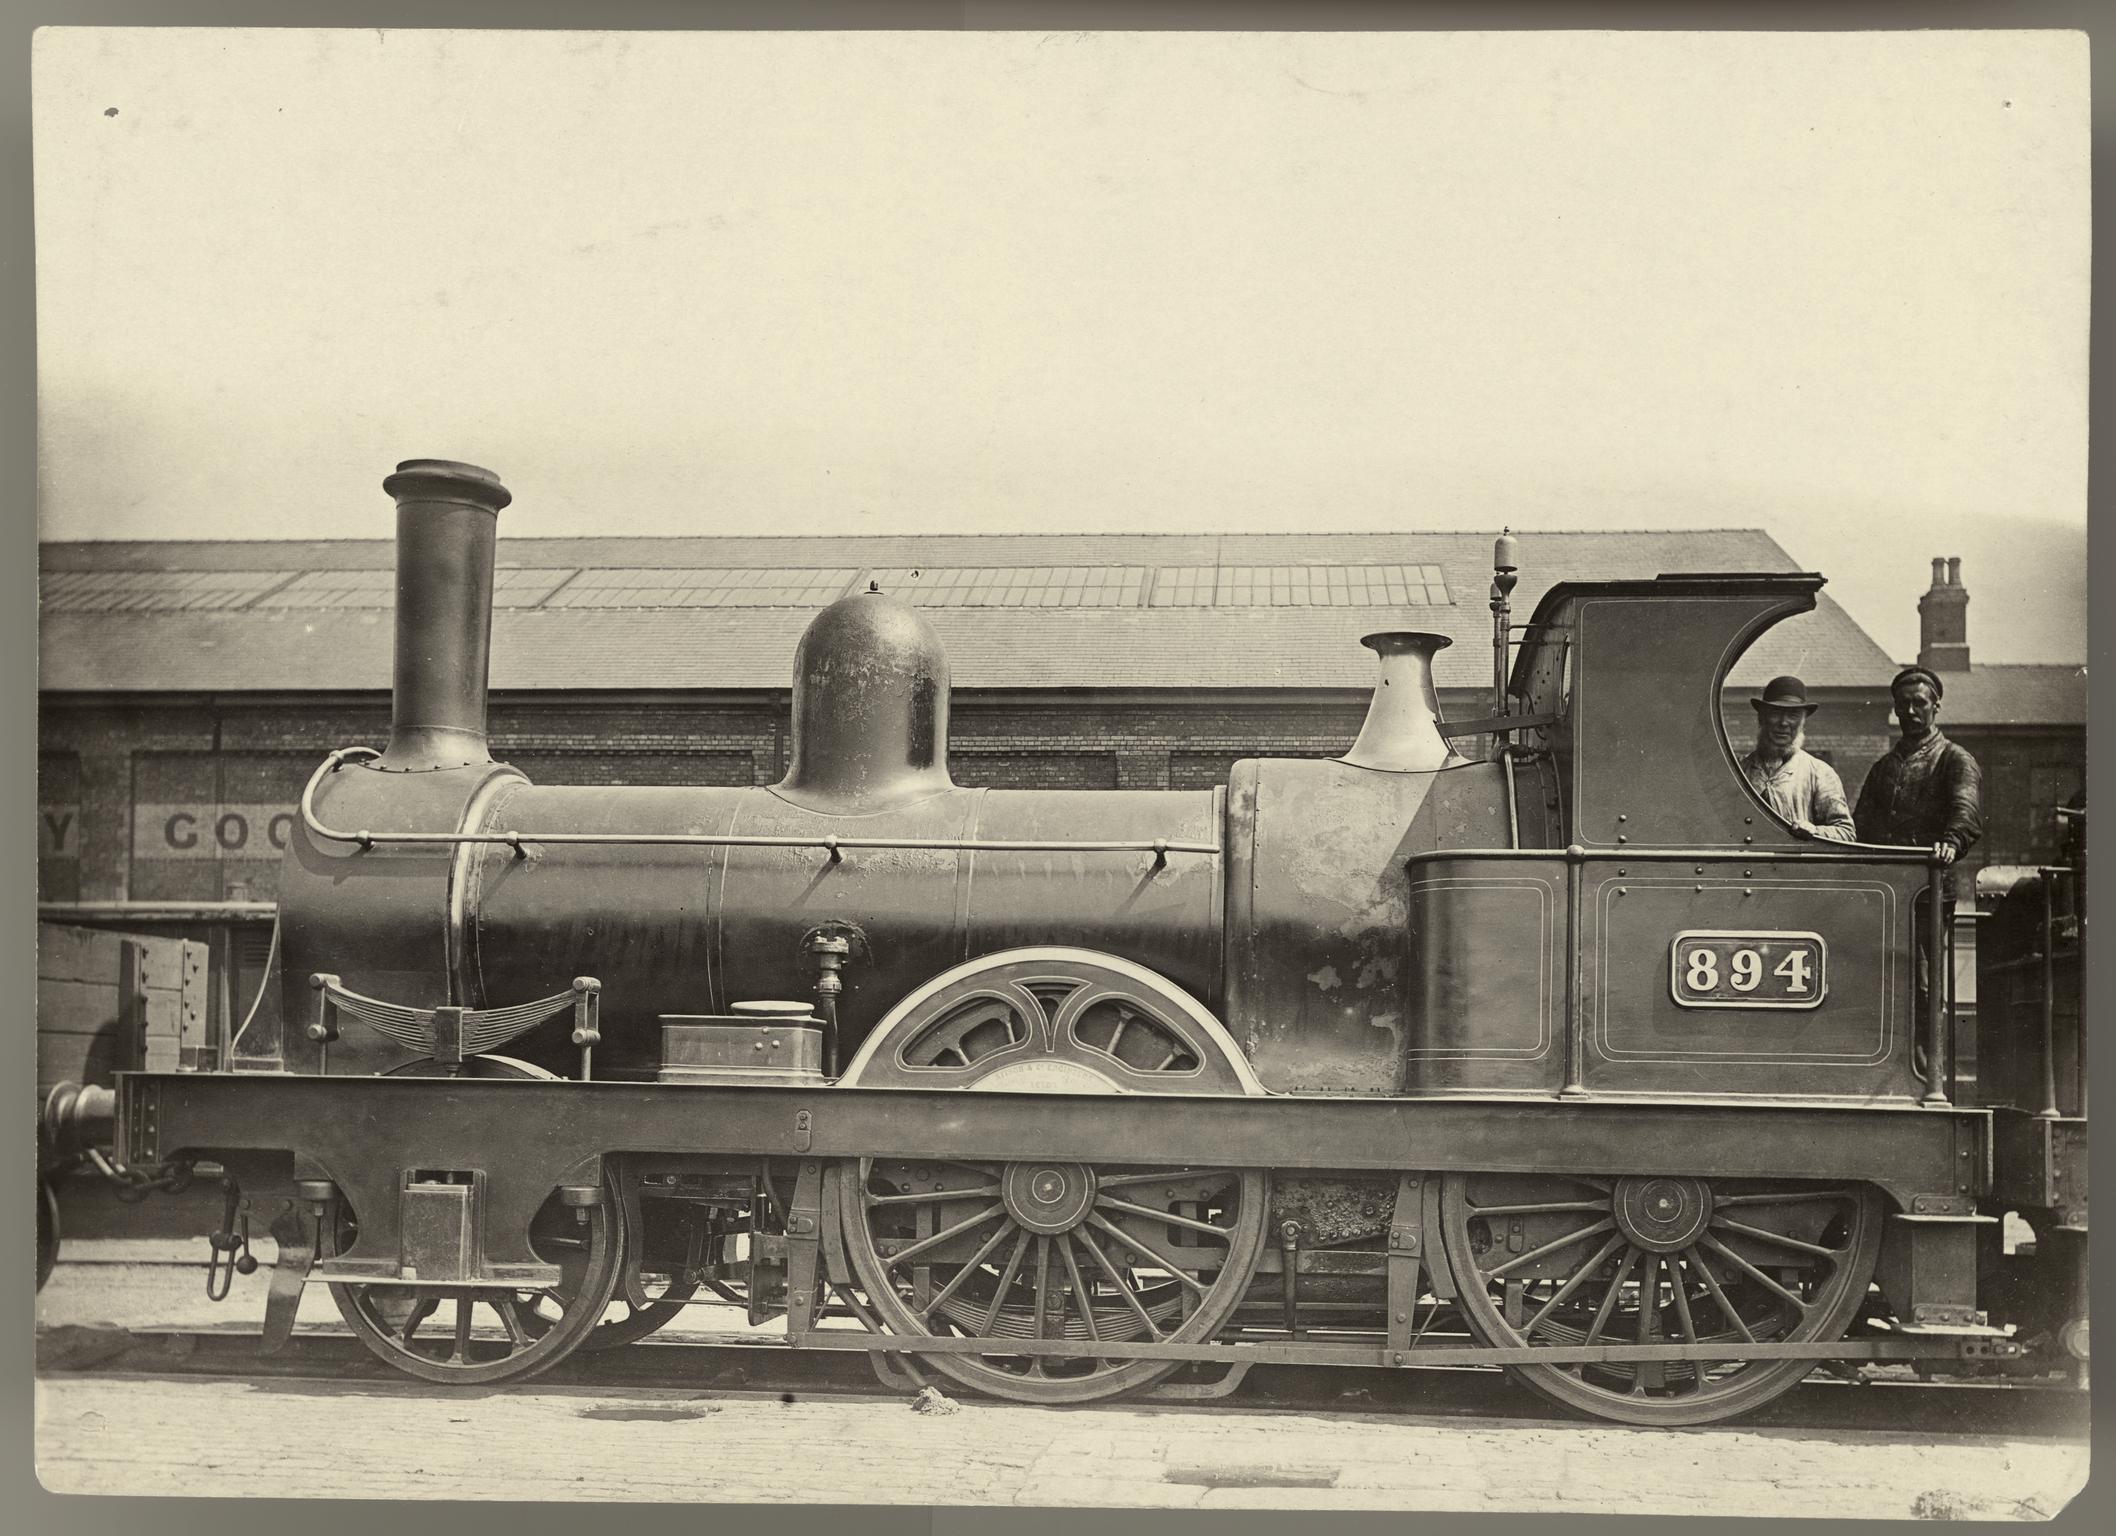 Llanelly Railway & Dock Company locomotive, photograph